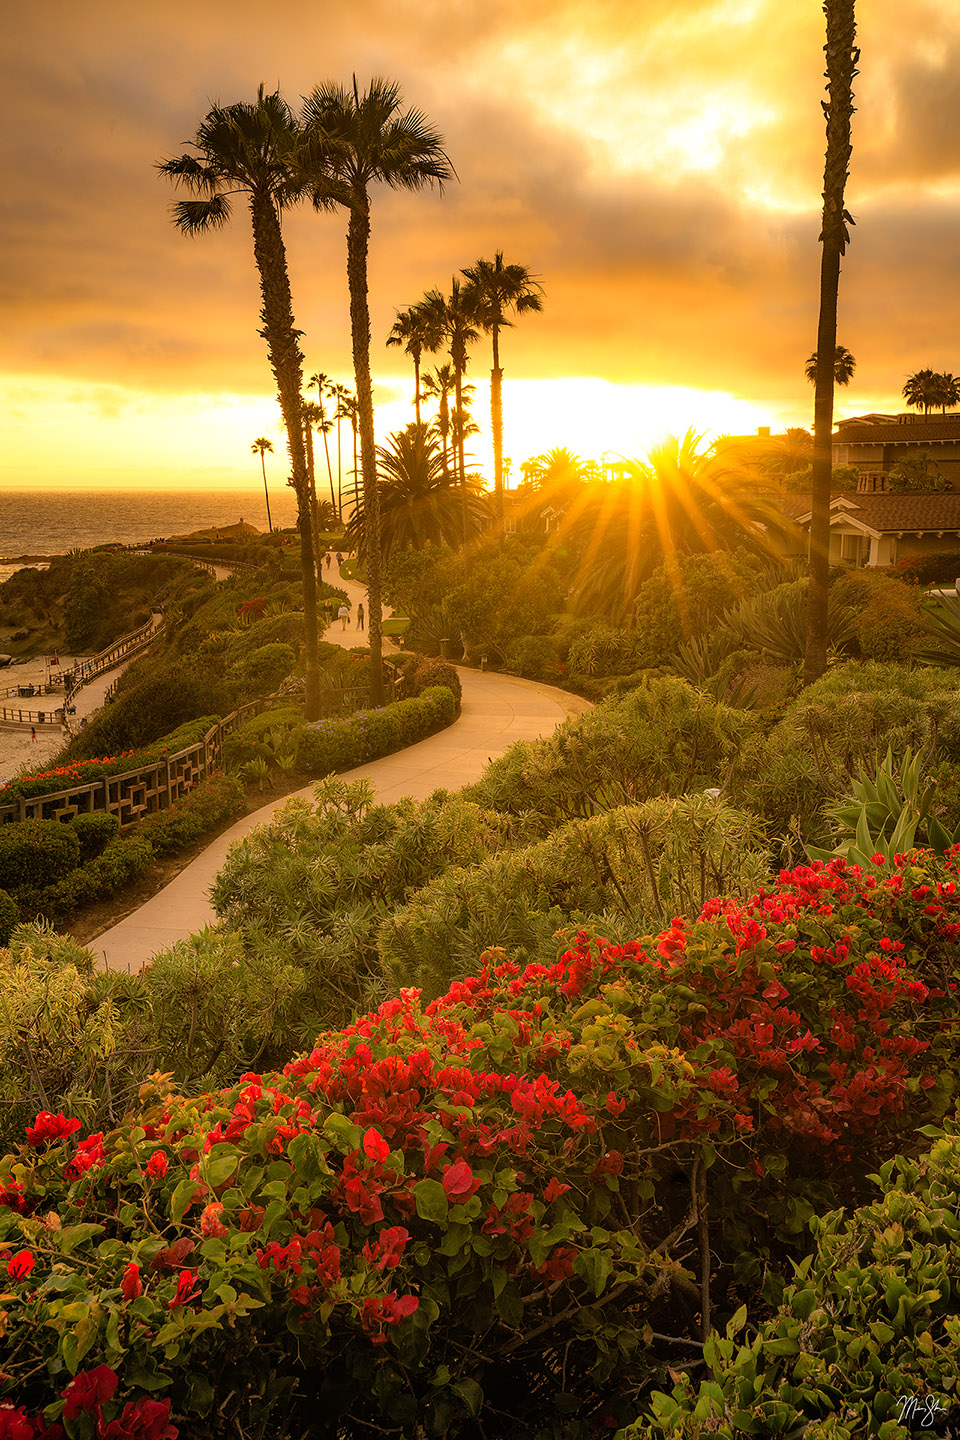 The Sunlit Path of Laguna Beach - Laguna Beach, California